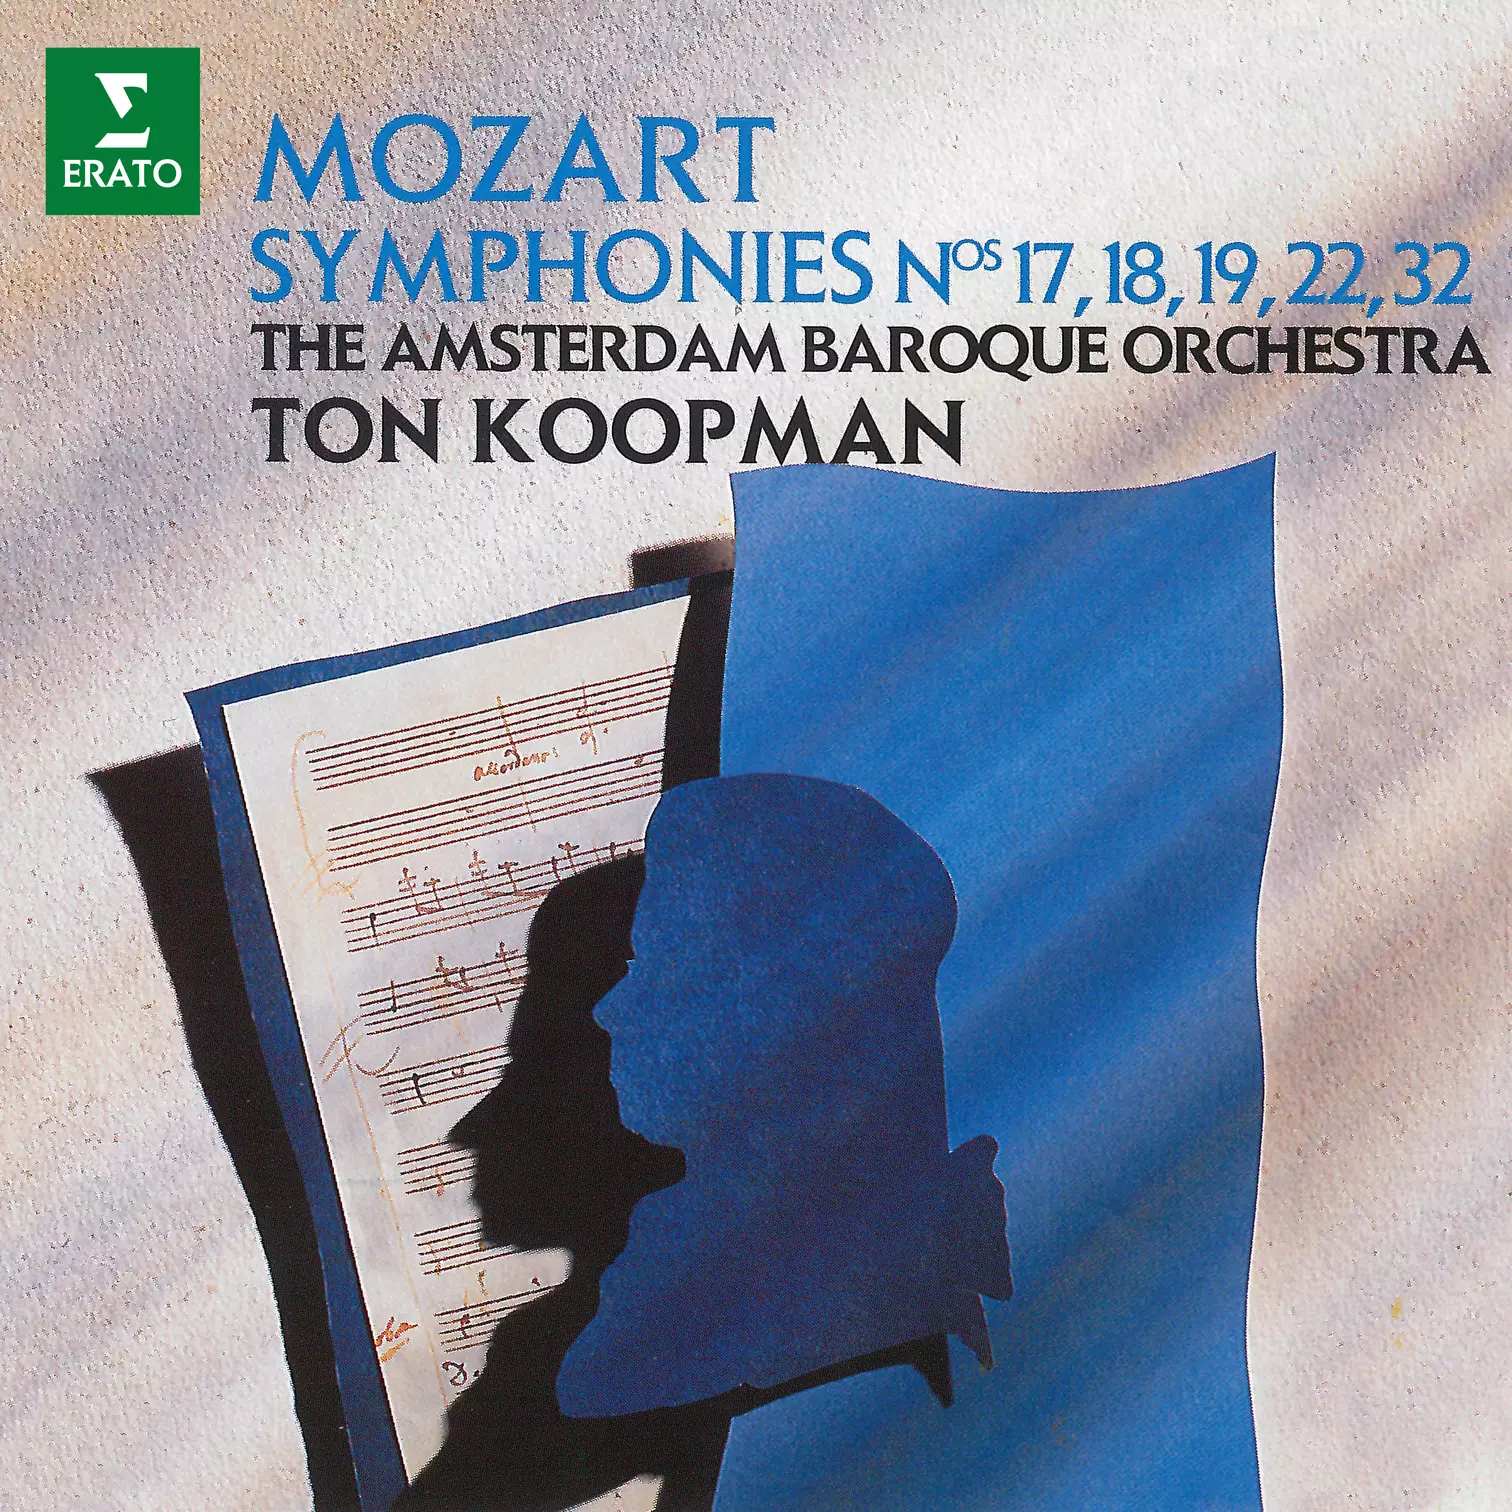 Mozart: Symphonies Nos. 17, 18, 19, 22 & 32